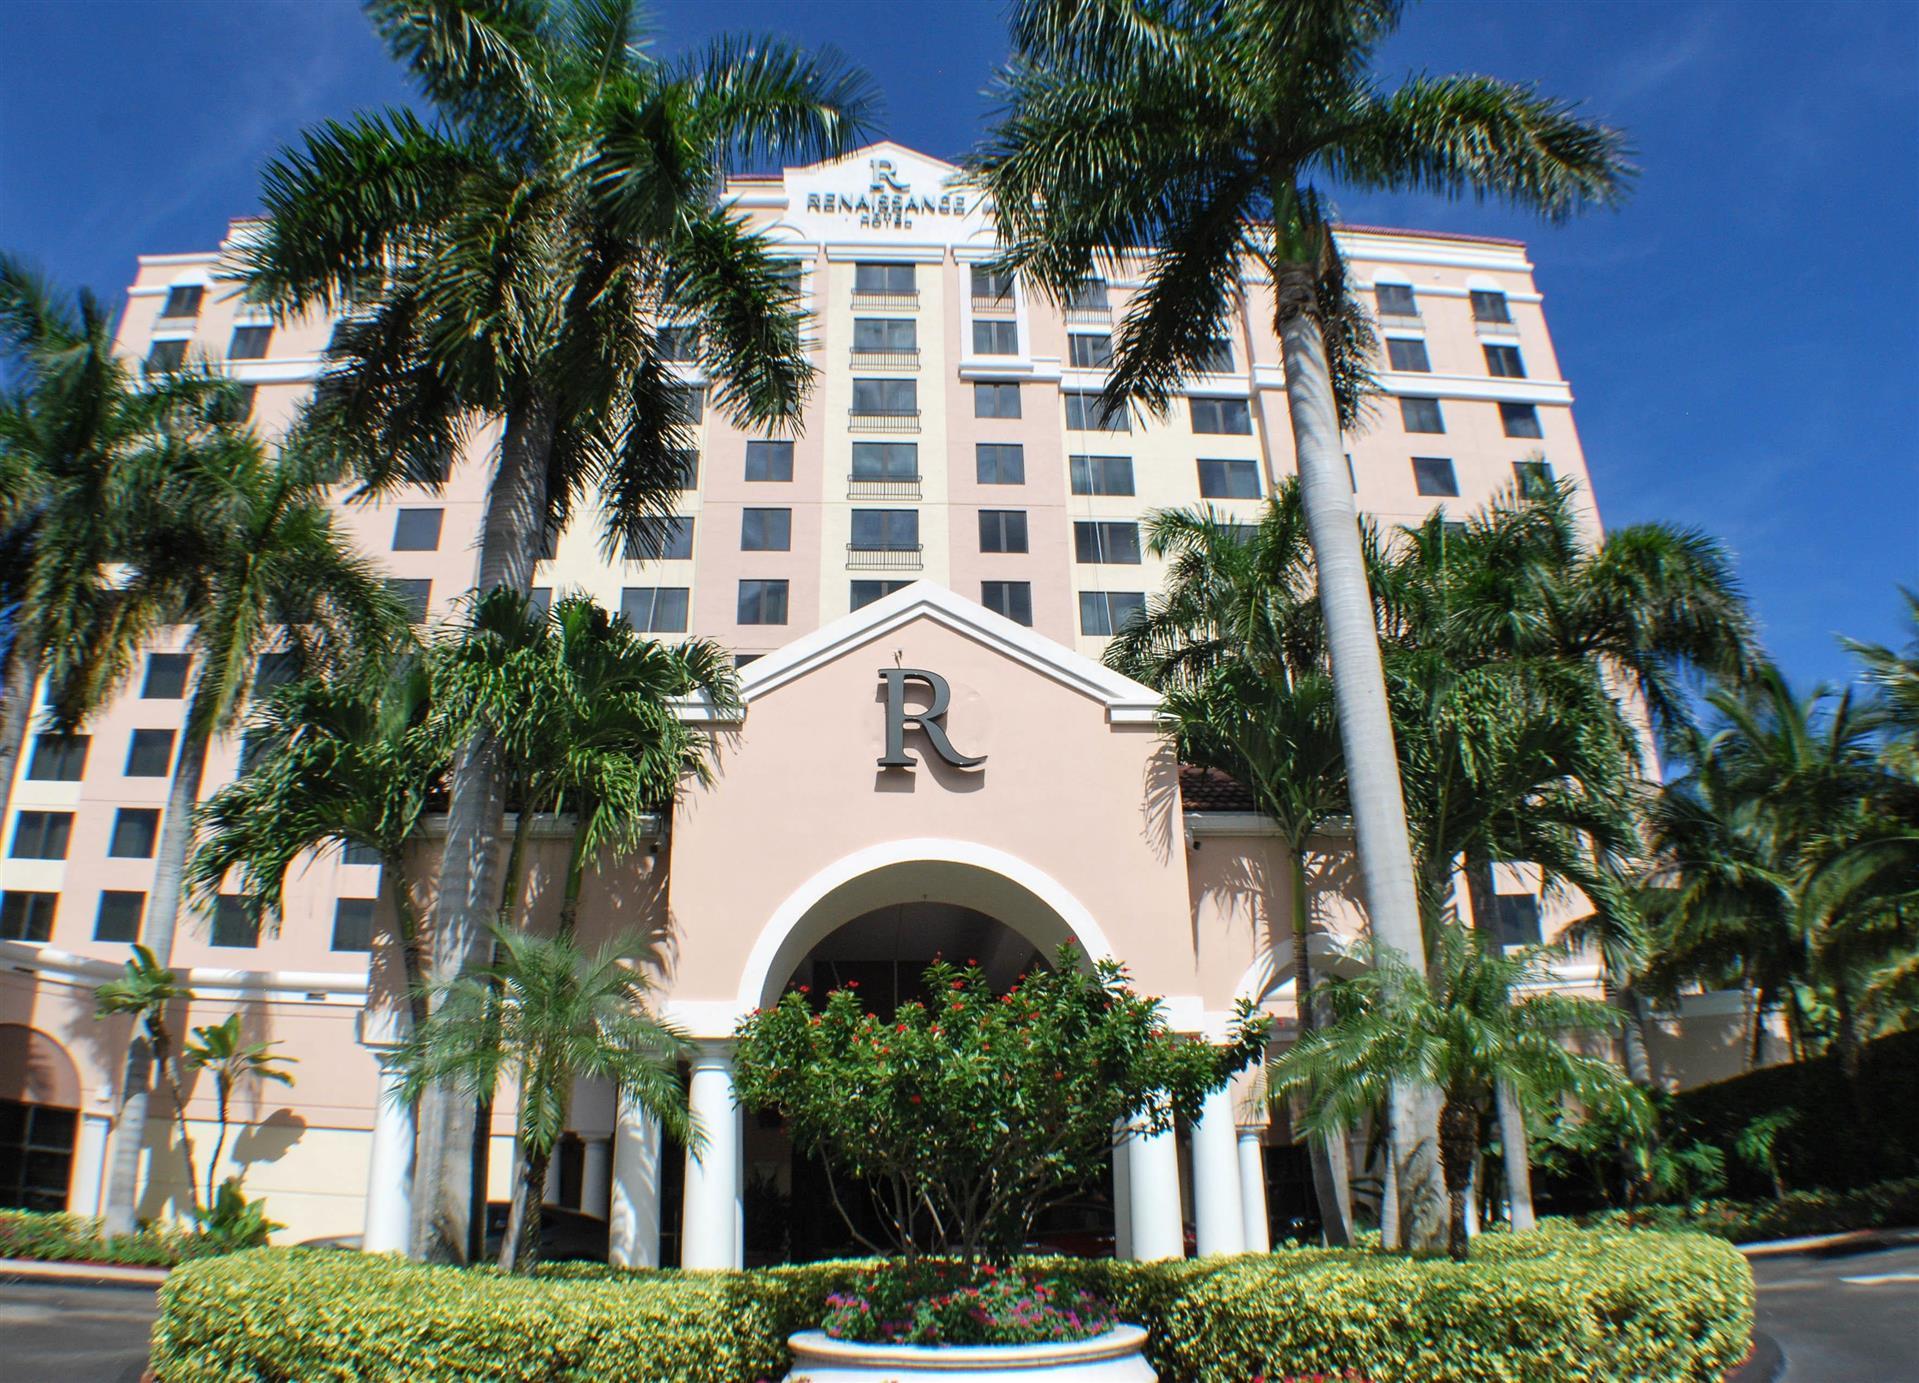 Renaissance Fort Lauderdale Marina Hotel in Fort Lauderdale, FL